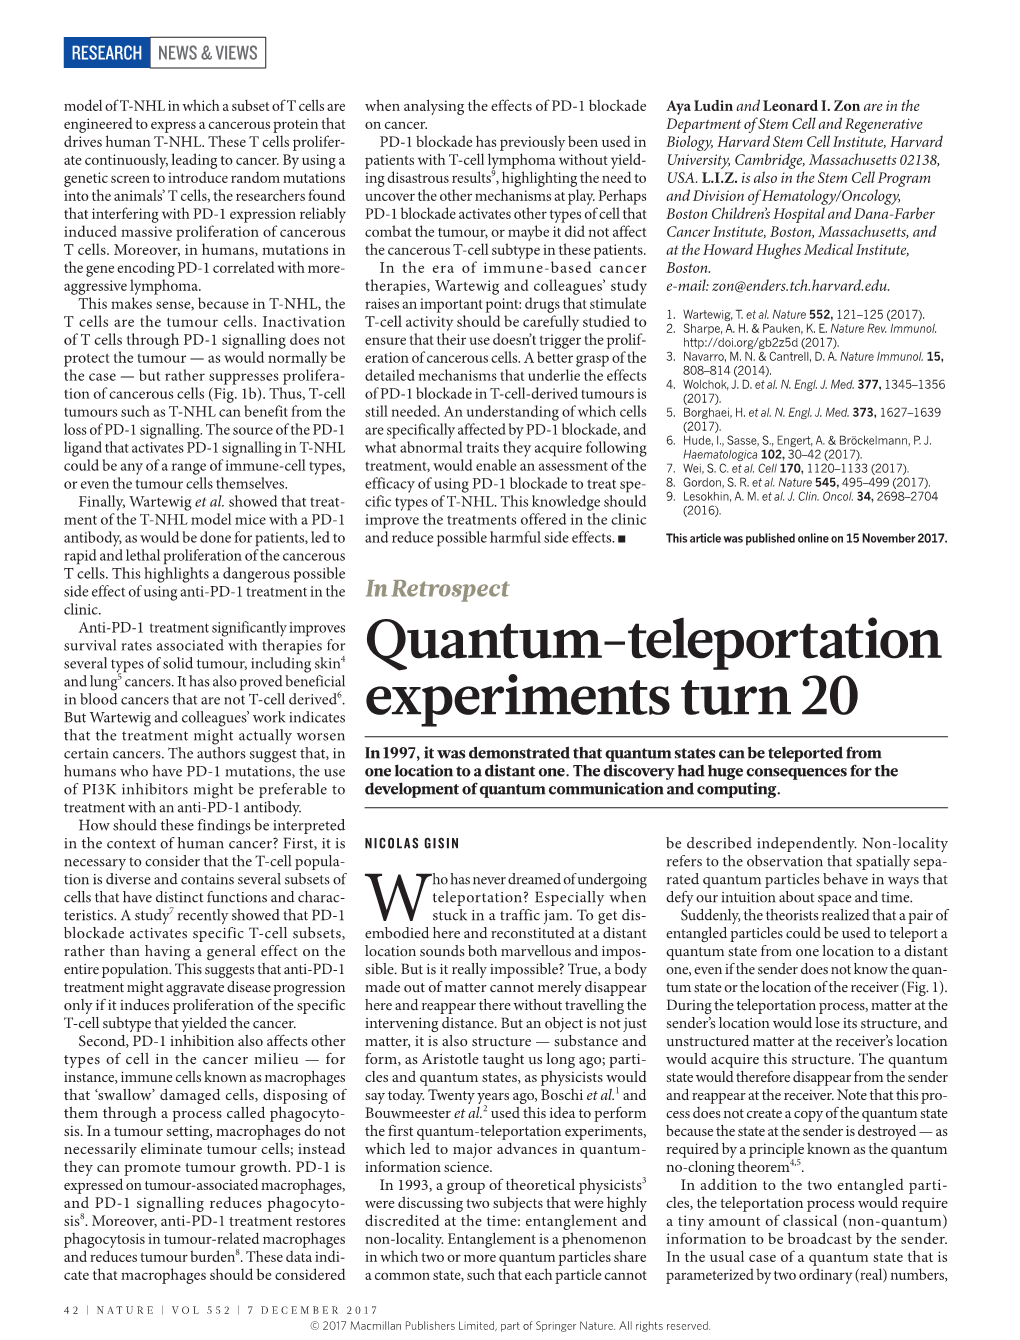 Quantum-Teleportation Experiments Turn 20